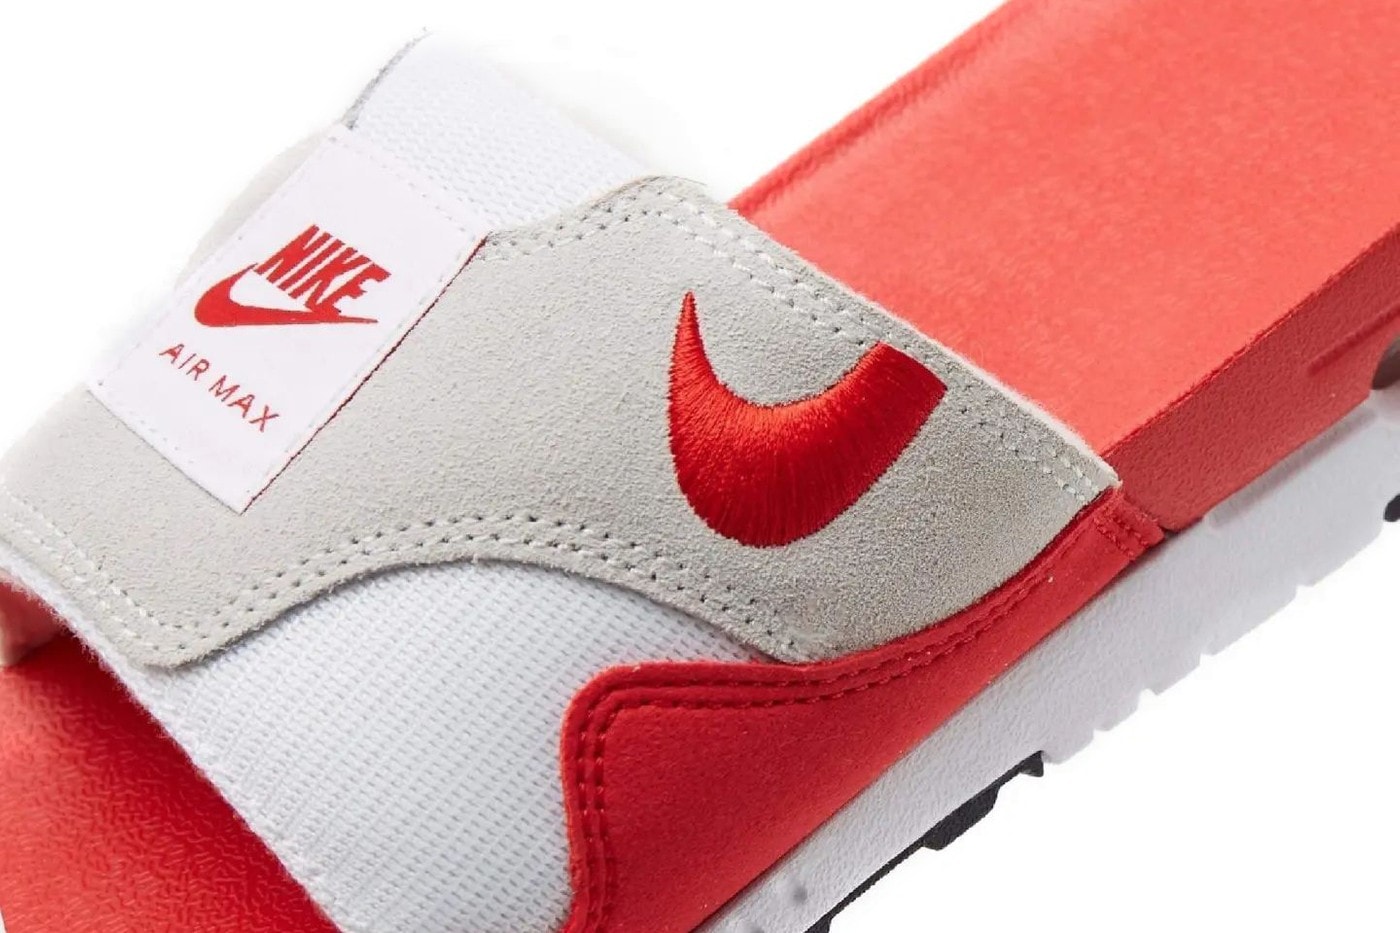 Nike 全新變體拖鞋 Air Max 1 Slide 率先亮相